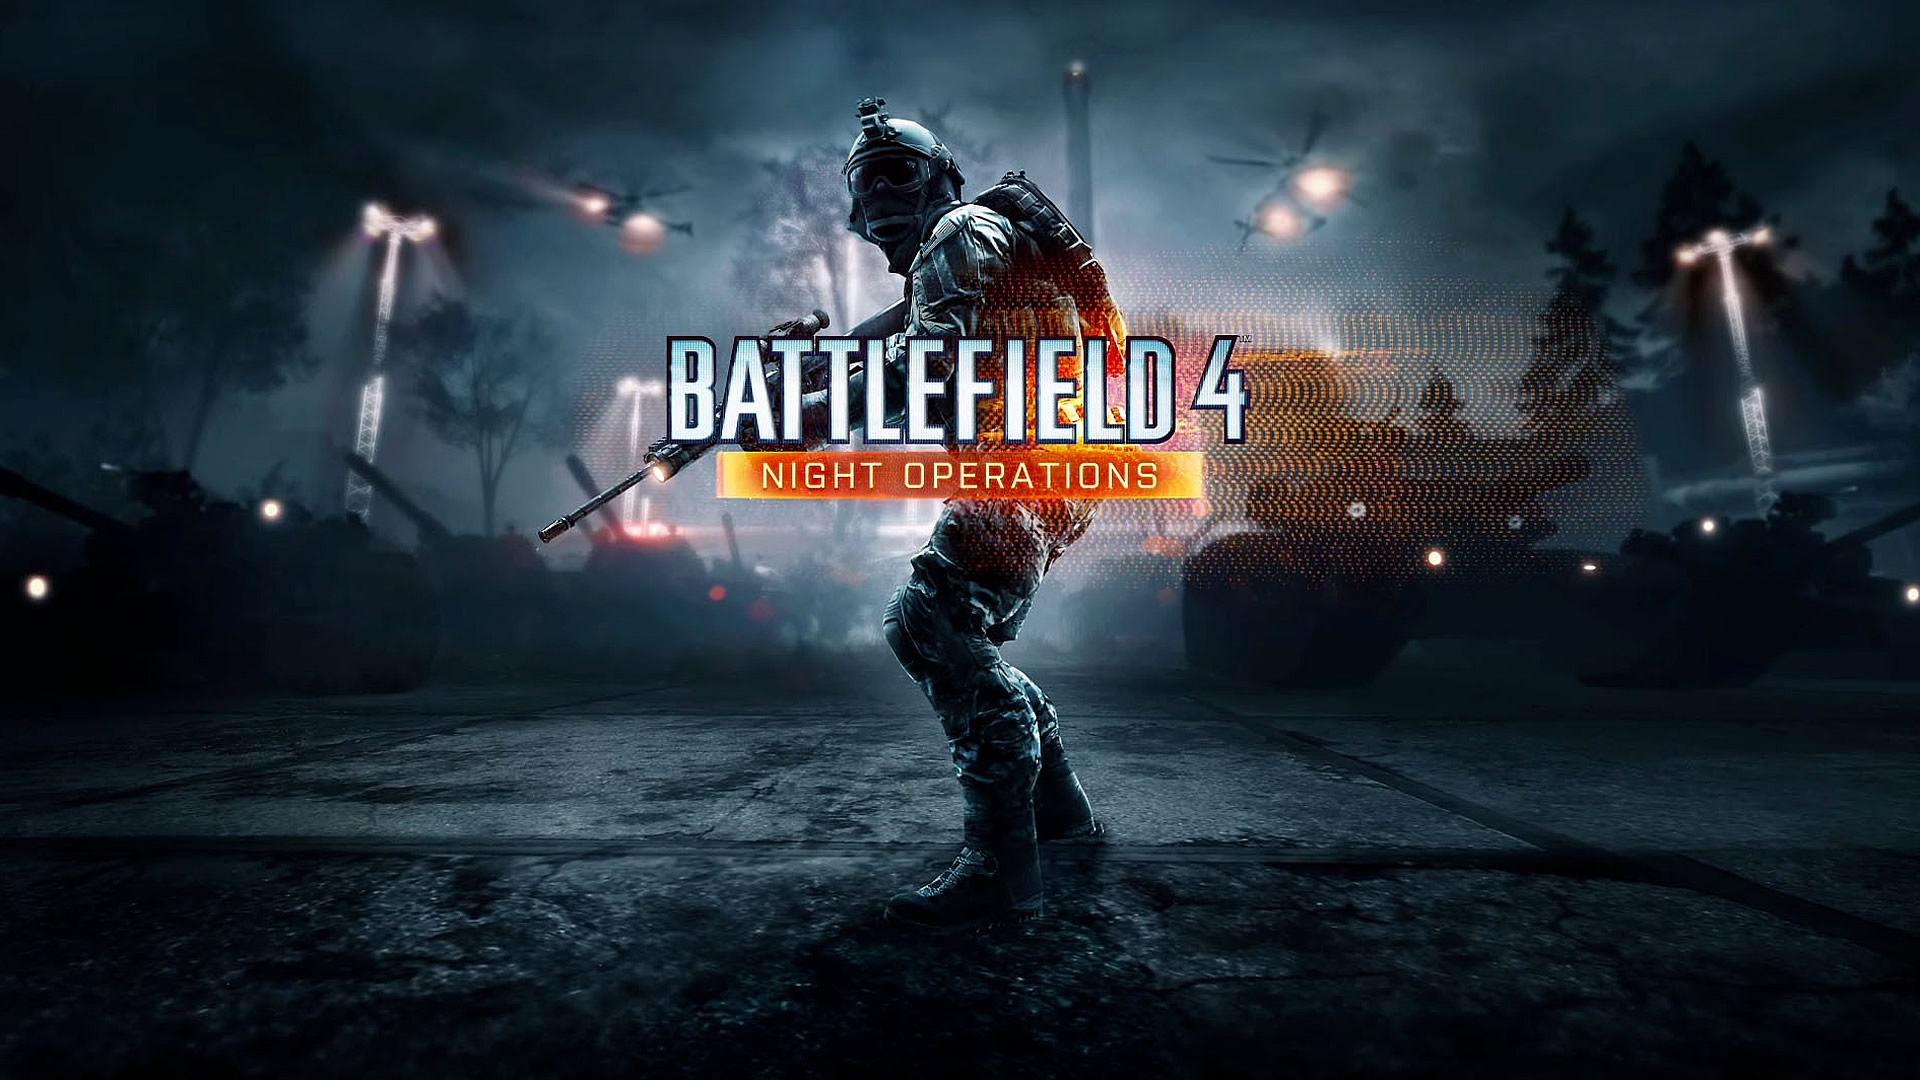 Battlefield 4 Night Operations wallpaper   Battlefield 4